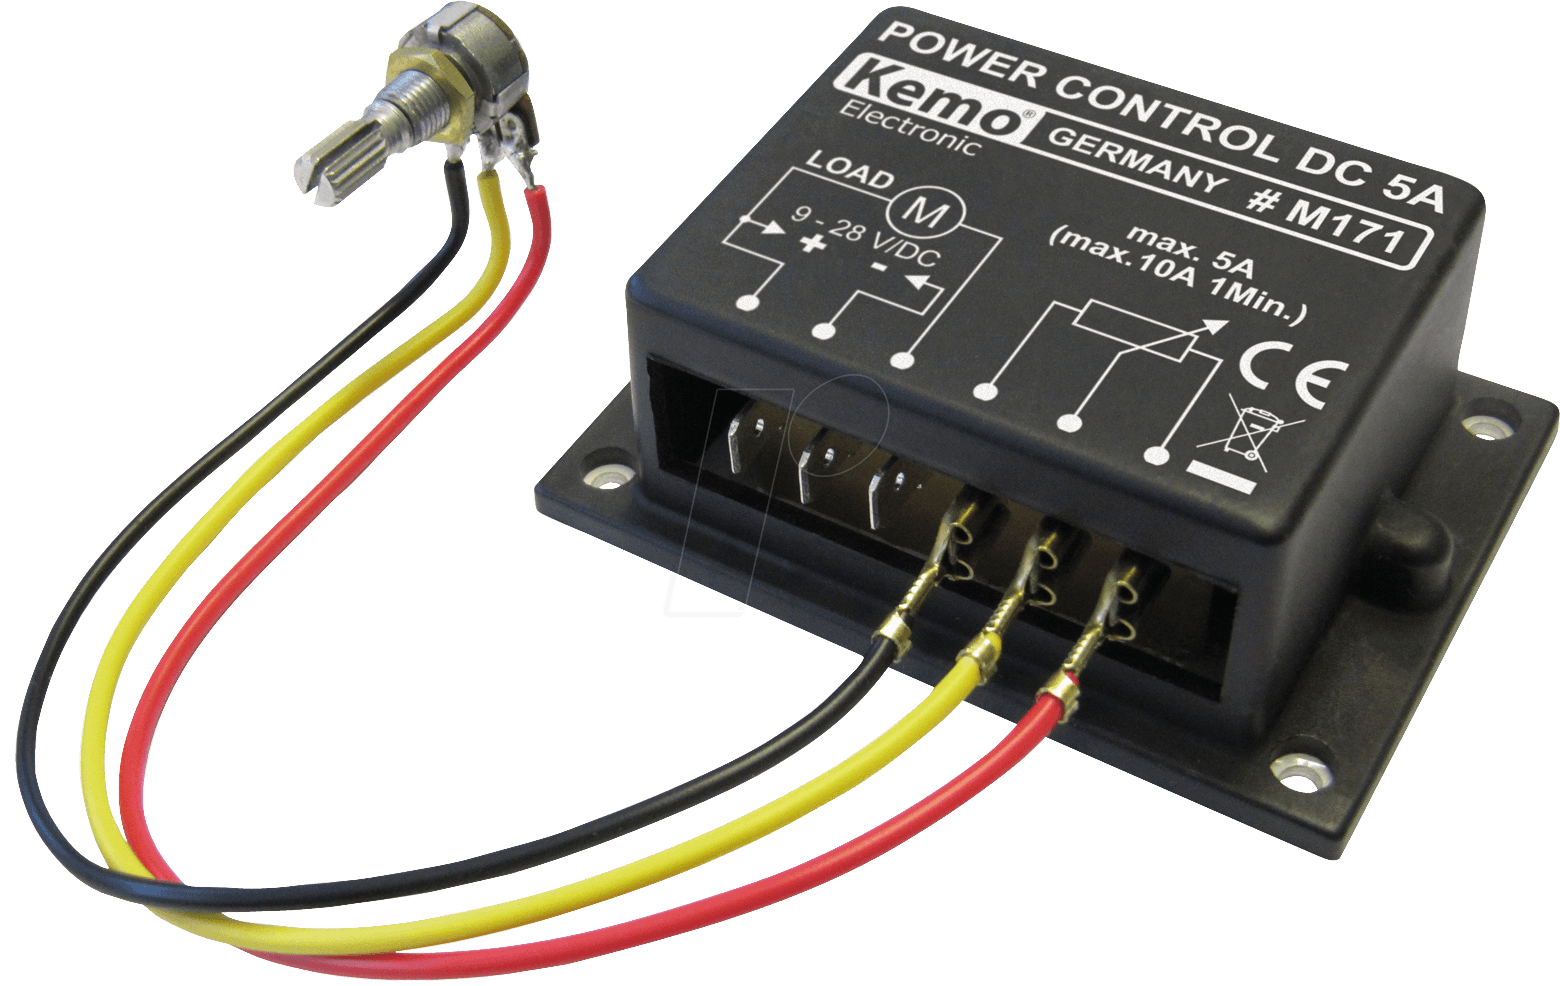 K 5 power control. Power Control Kemo m012. DC 24v 5 a регулятор. Регулятор напряжения 12 вольт в авто. Реле контроллера напряжения 12 вольт.